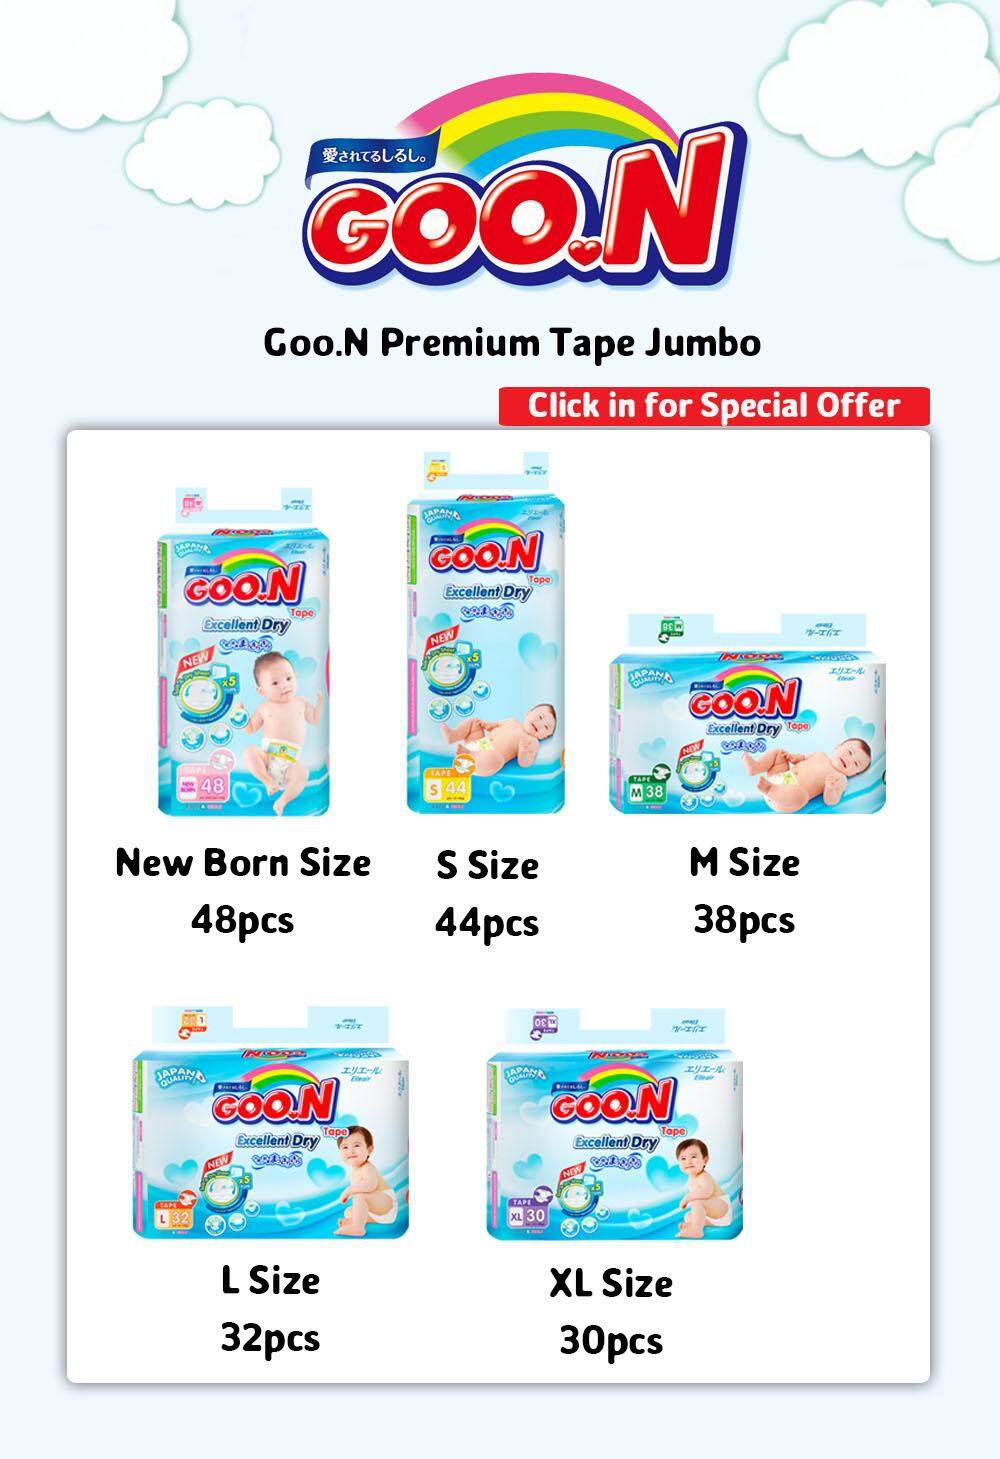 GooN Premium Tape Jumbo Product Description 1.jpg